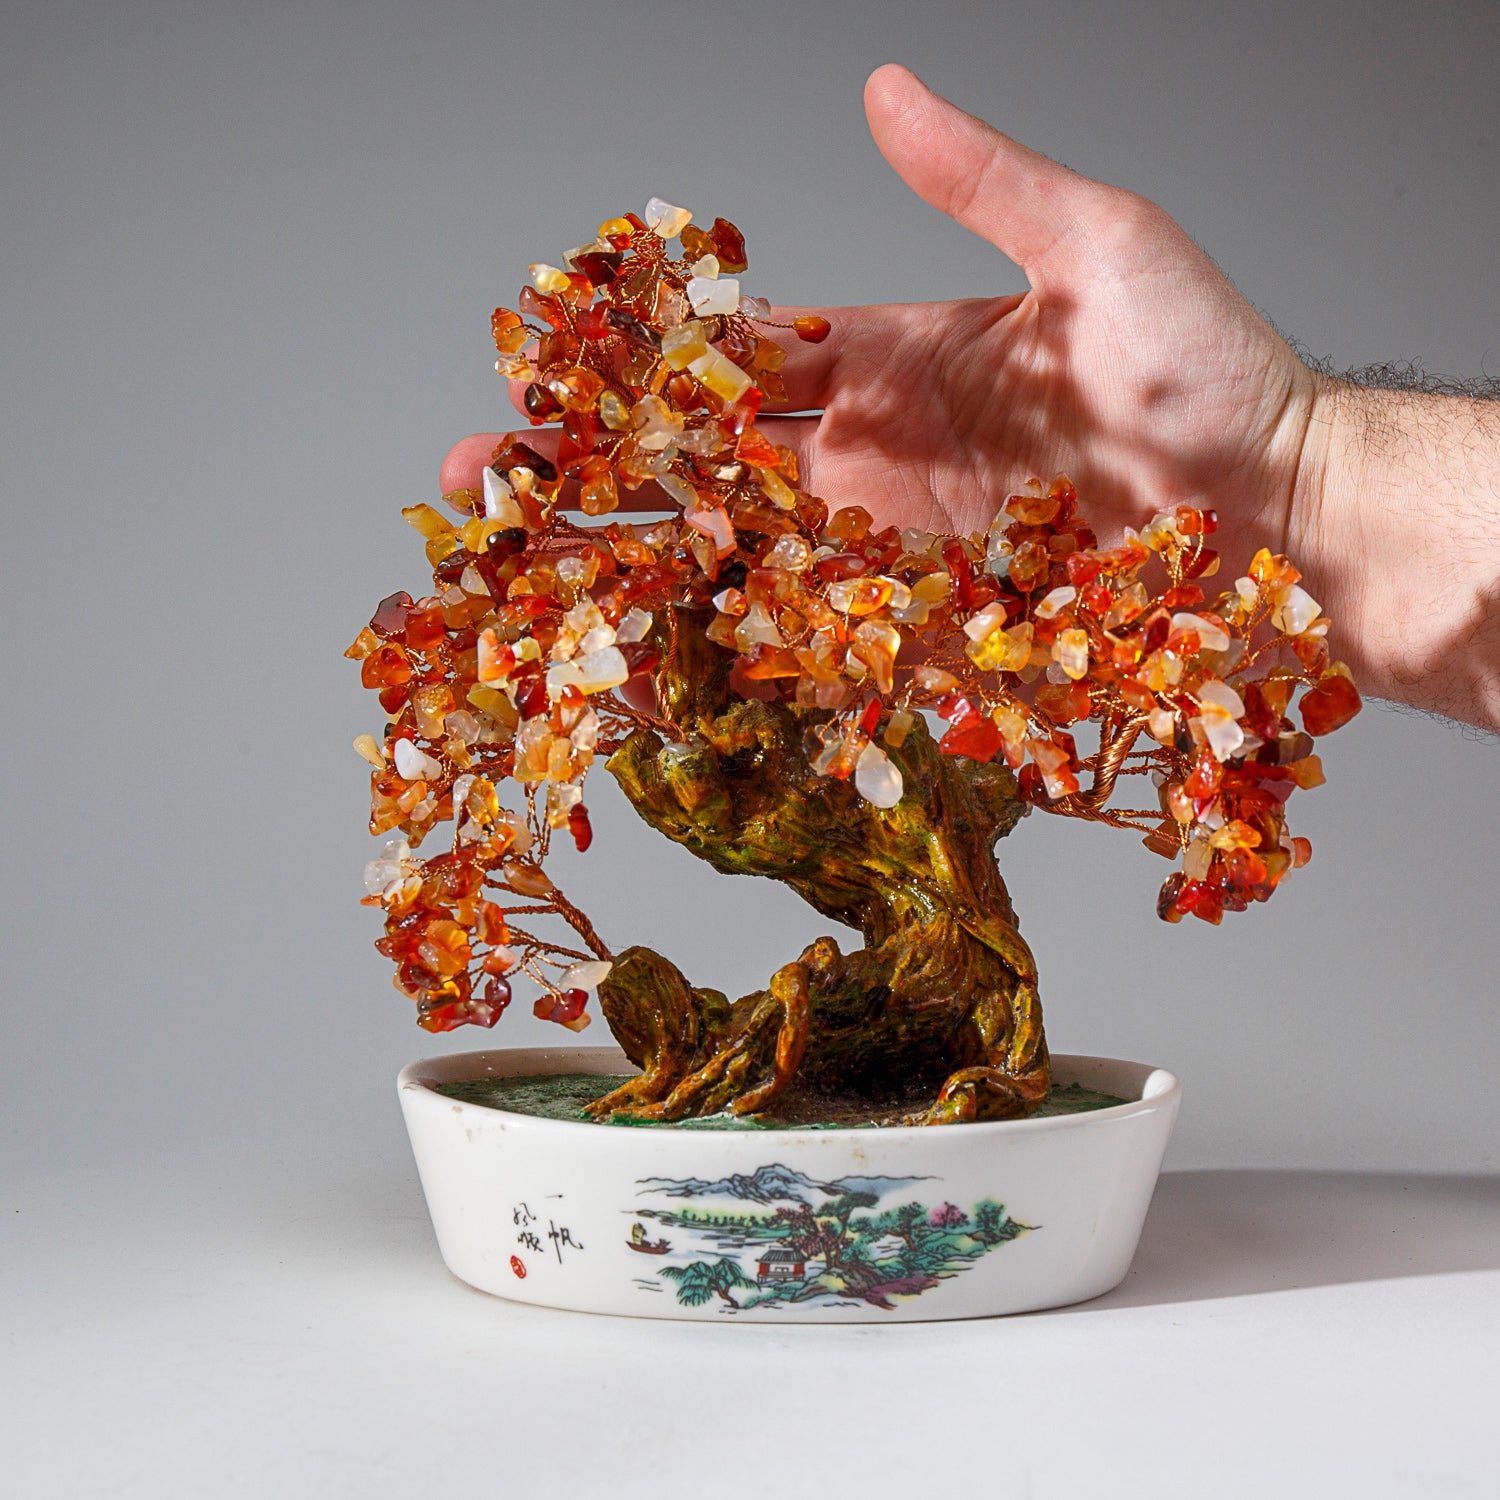 Genuine Carnelian Gemstone Bonsai Tree in Oval Ceramic Pot (9” Tall)